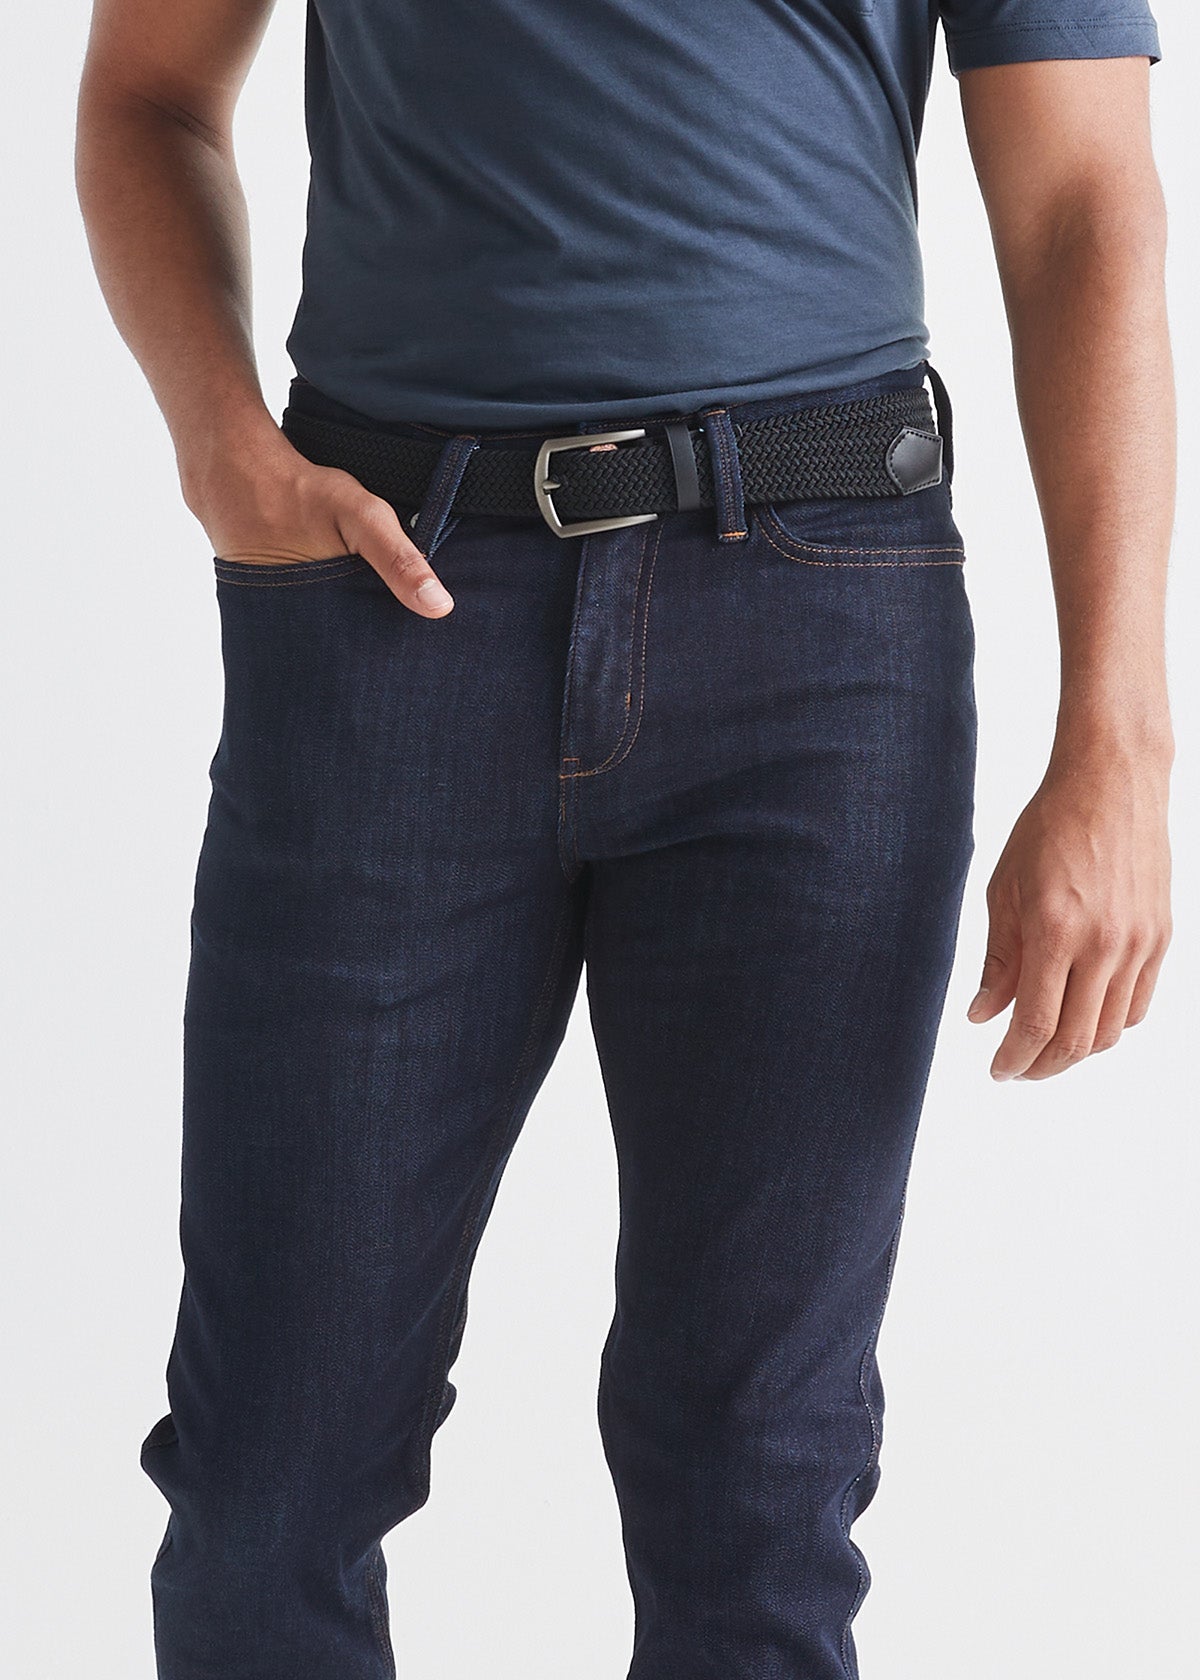 Men's belts,Full Grain Genuine Leather Casual Dress Jeans Belts for Men |  eBay